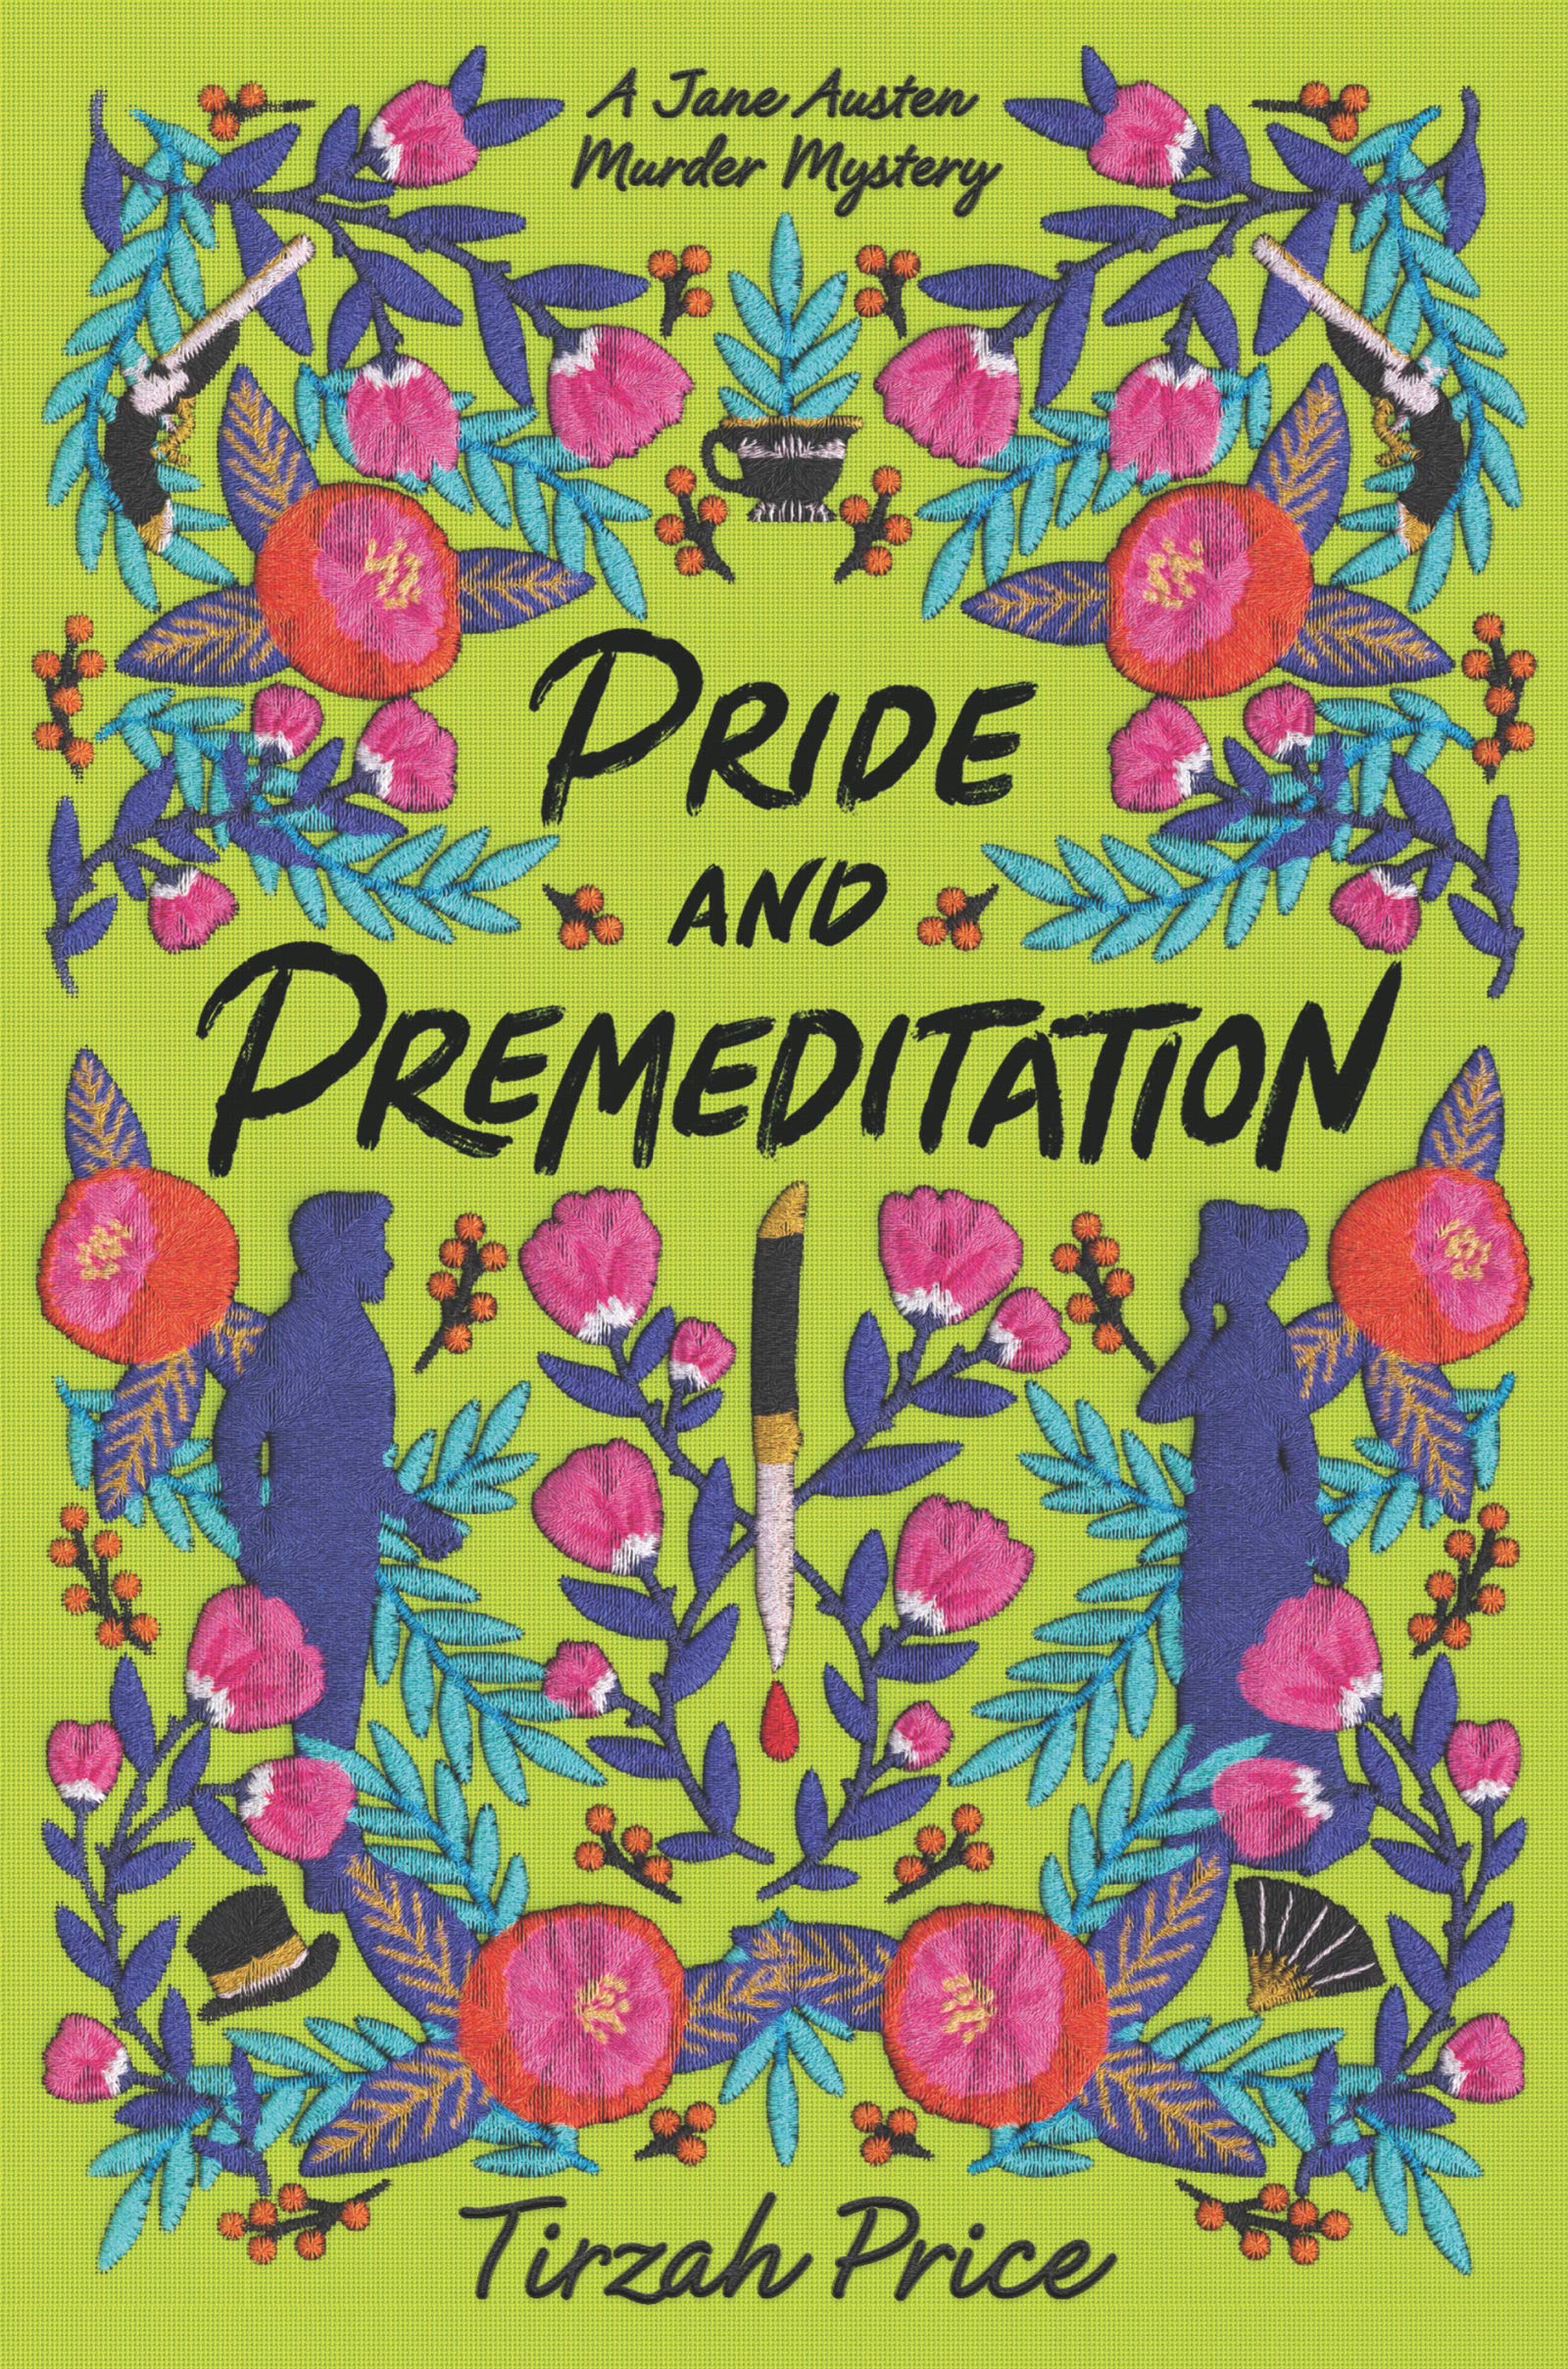 Image for "Pride and Premeditation"